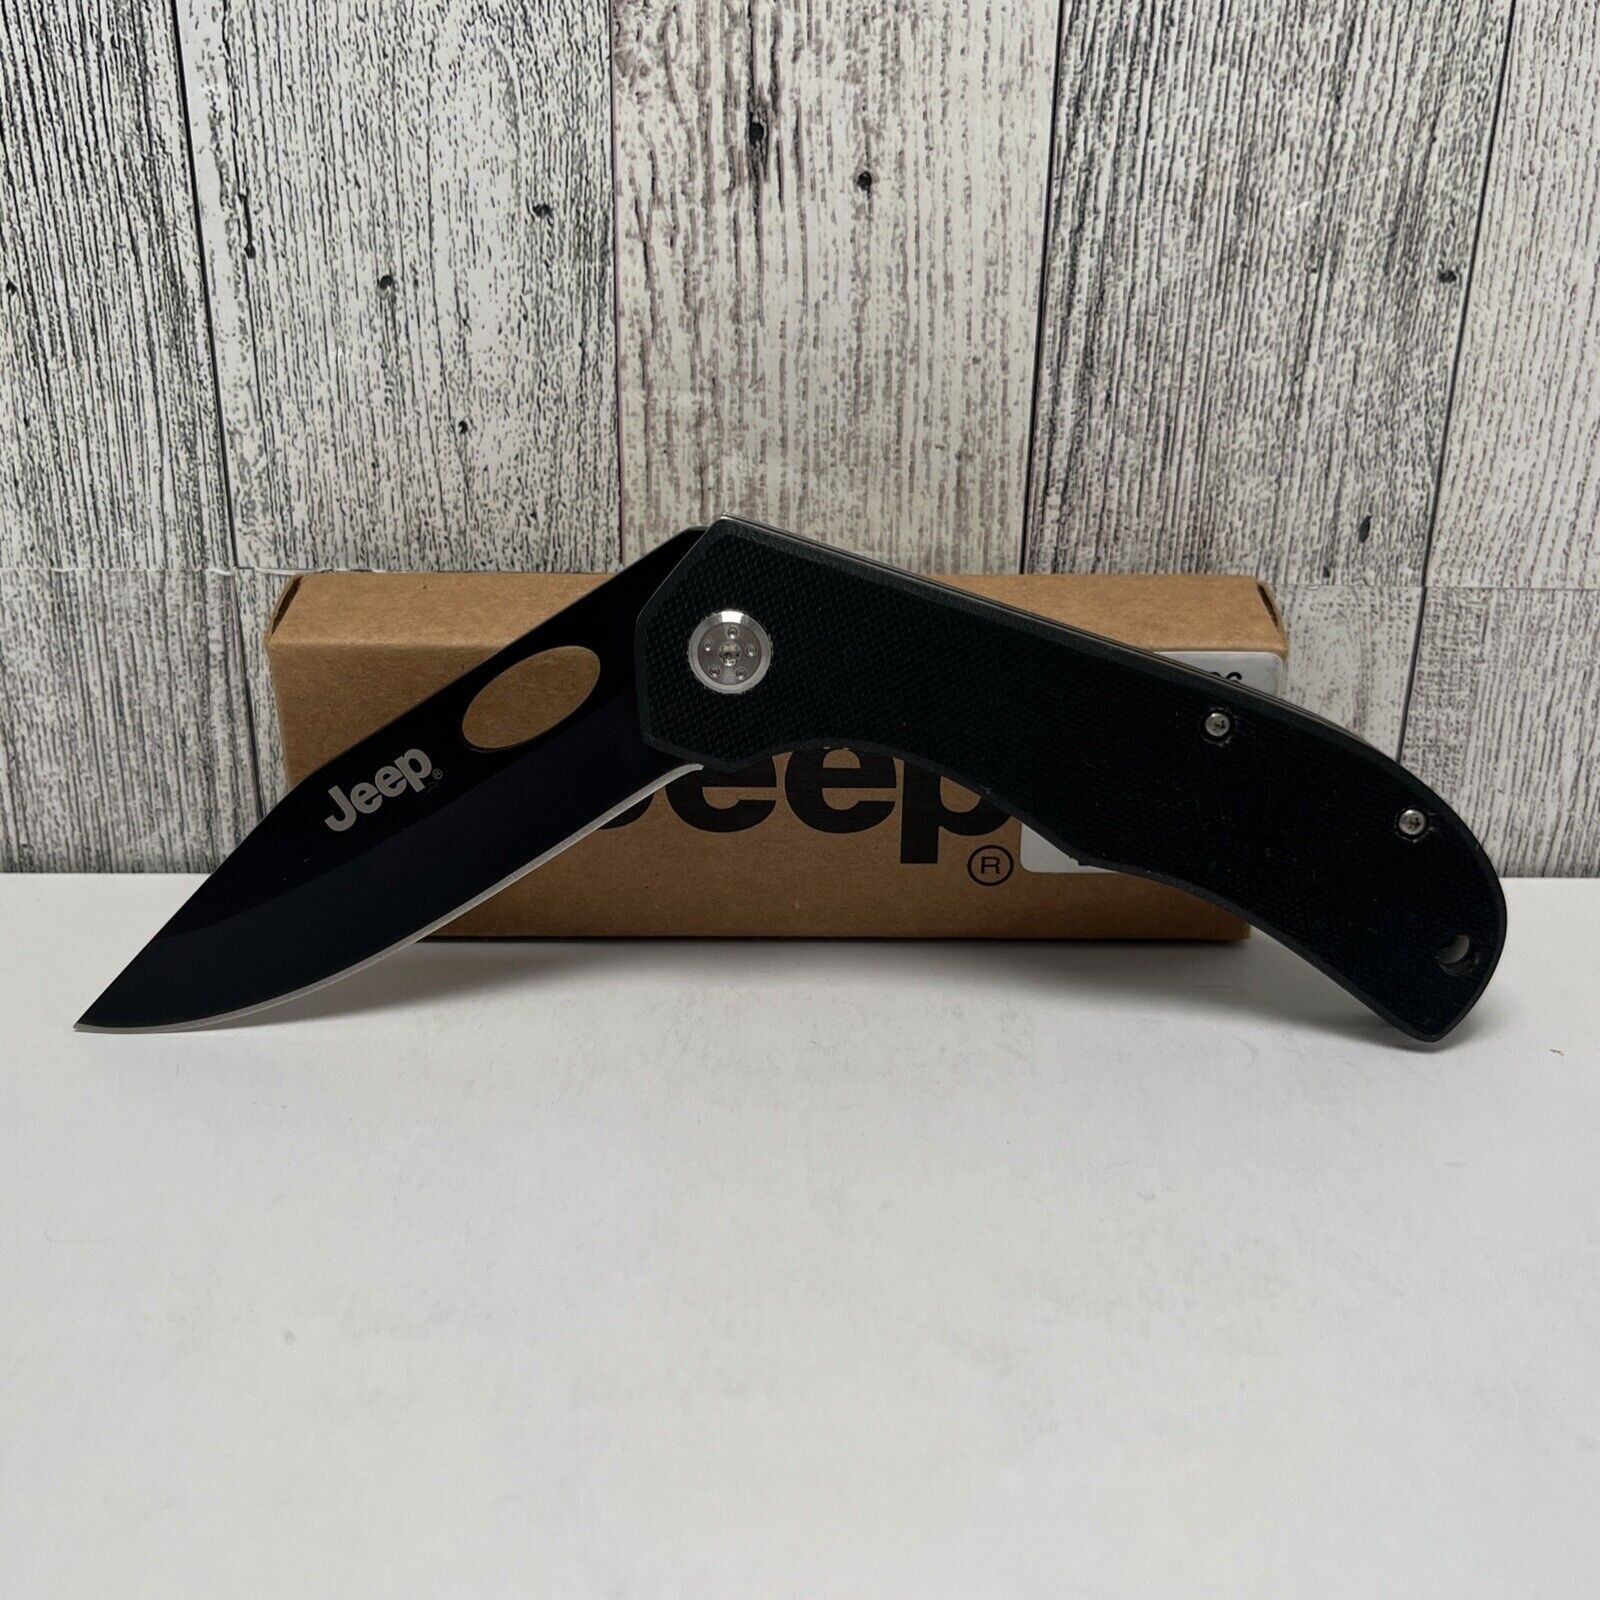 Jeep Folding Pocket Knife #440 Stainless Black Blade New